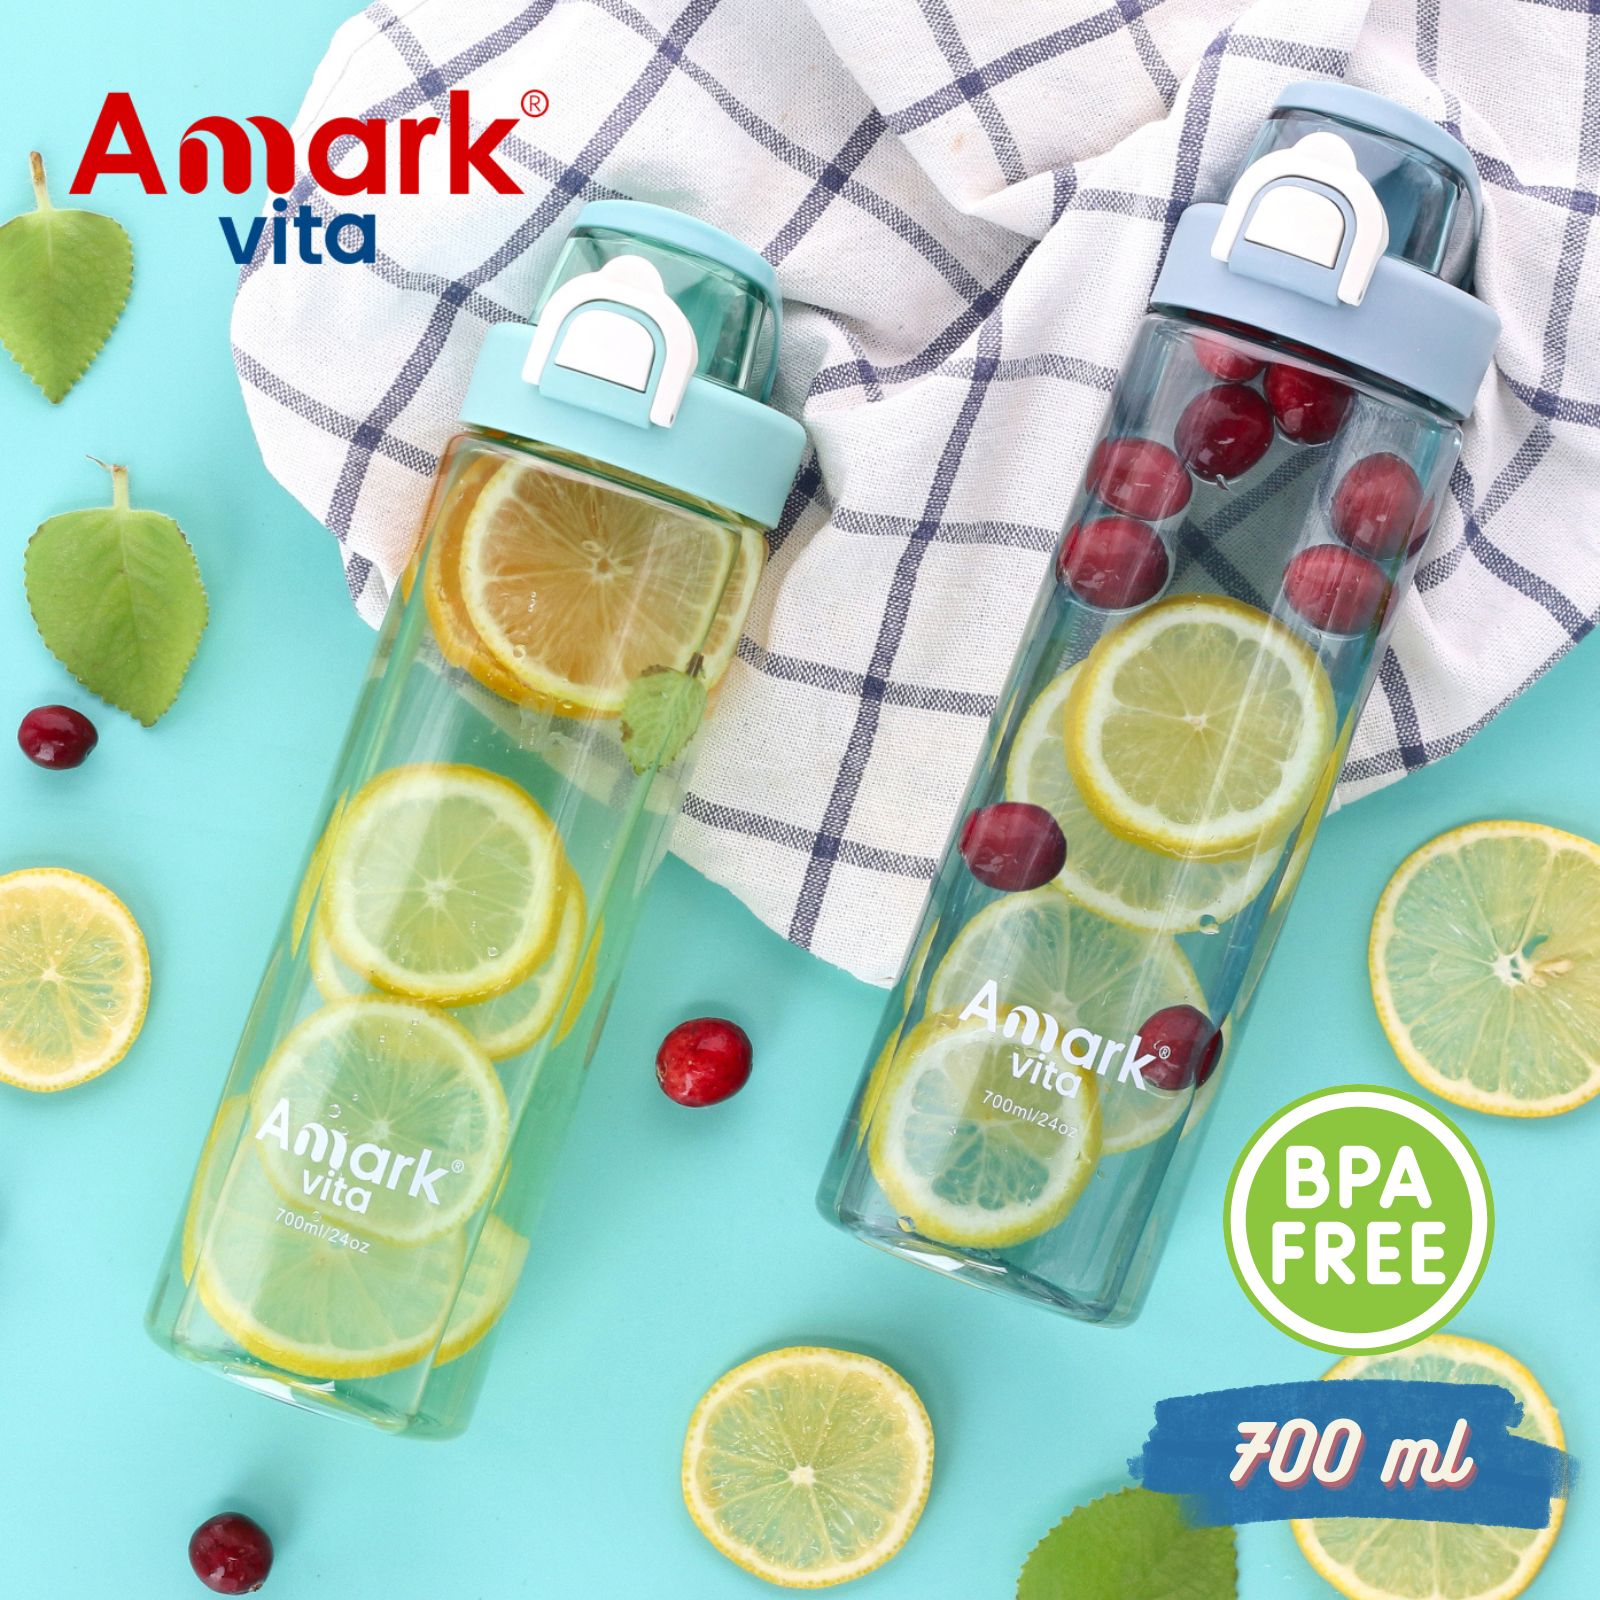 Amark Vita BPA-Free Polycarbonate Sport Bottle 700ml